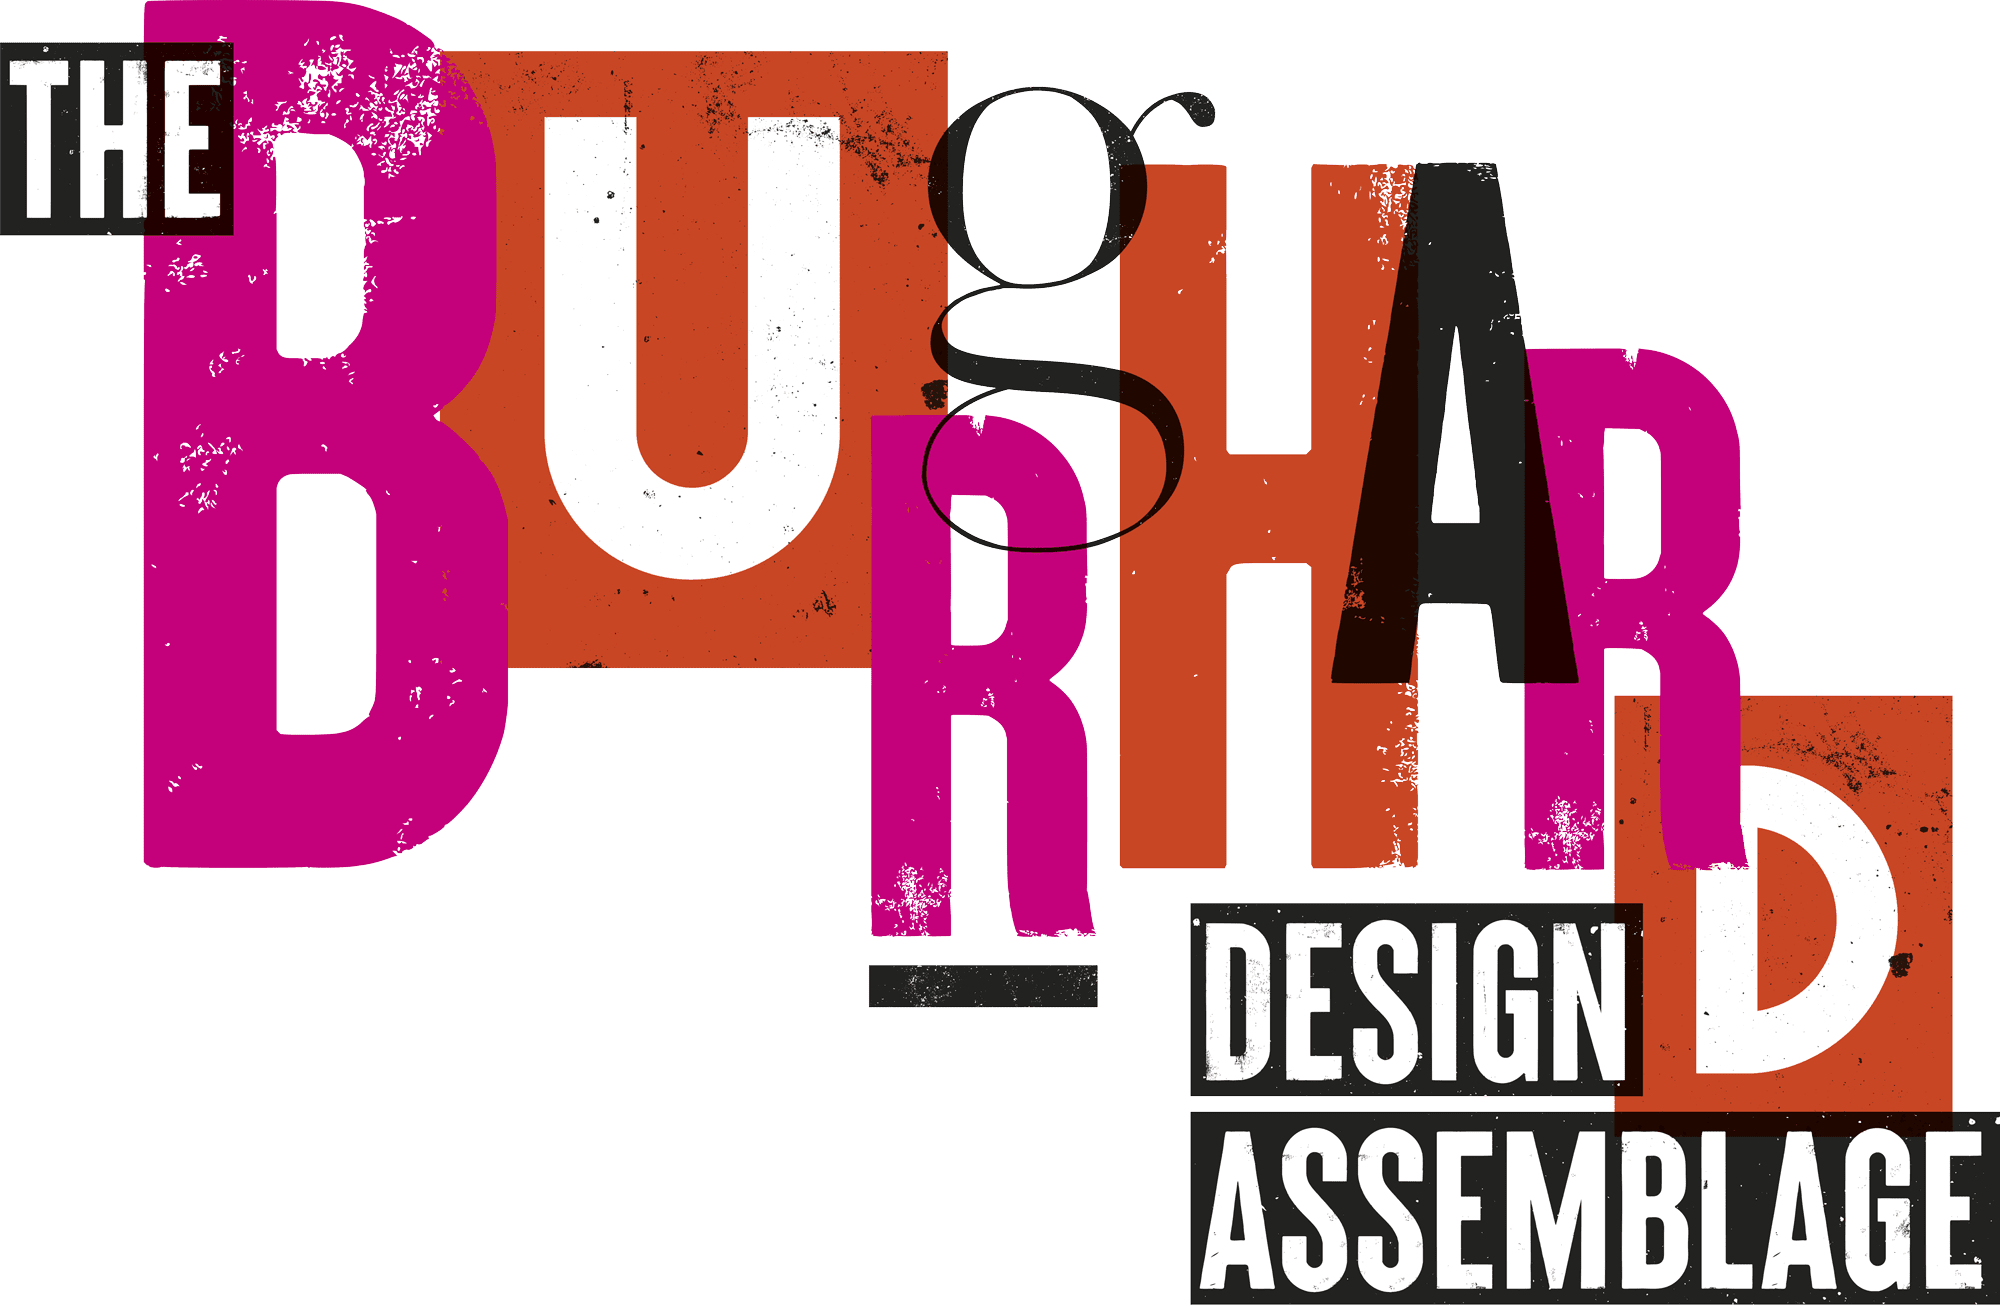 The Burghard Design Assemblage